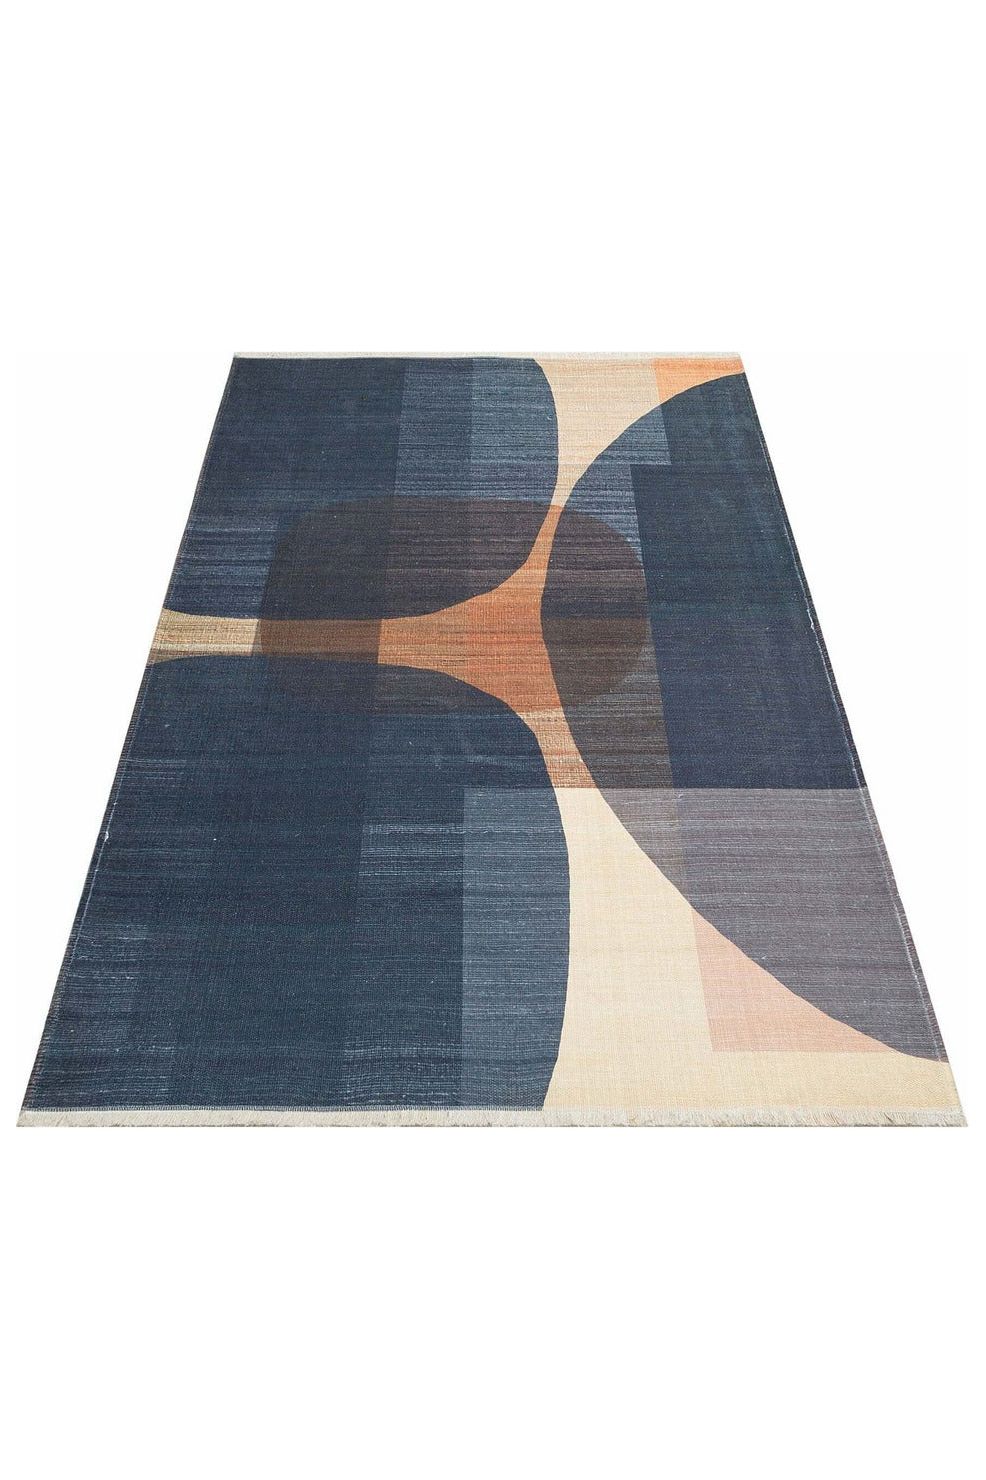 #Turkish_Carpets_Rugs# #Modern_Carpets# #Abrash_Carpets#Rb 06 D.Multy